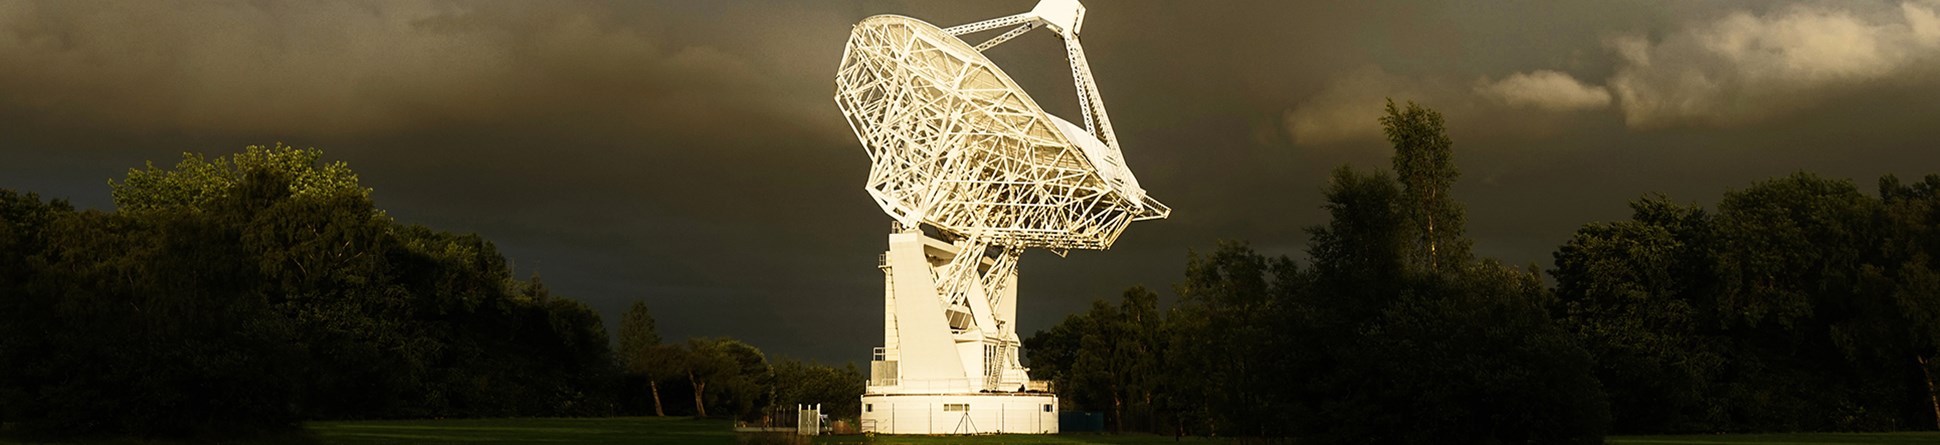 Mark II Telescope at Jodrell Bank